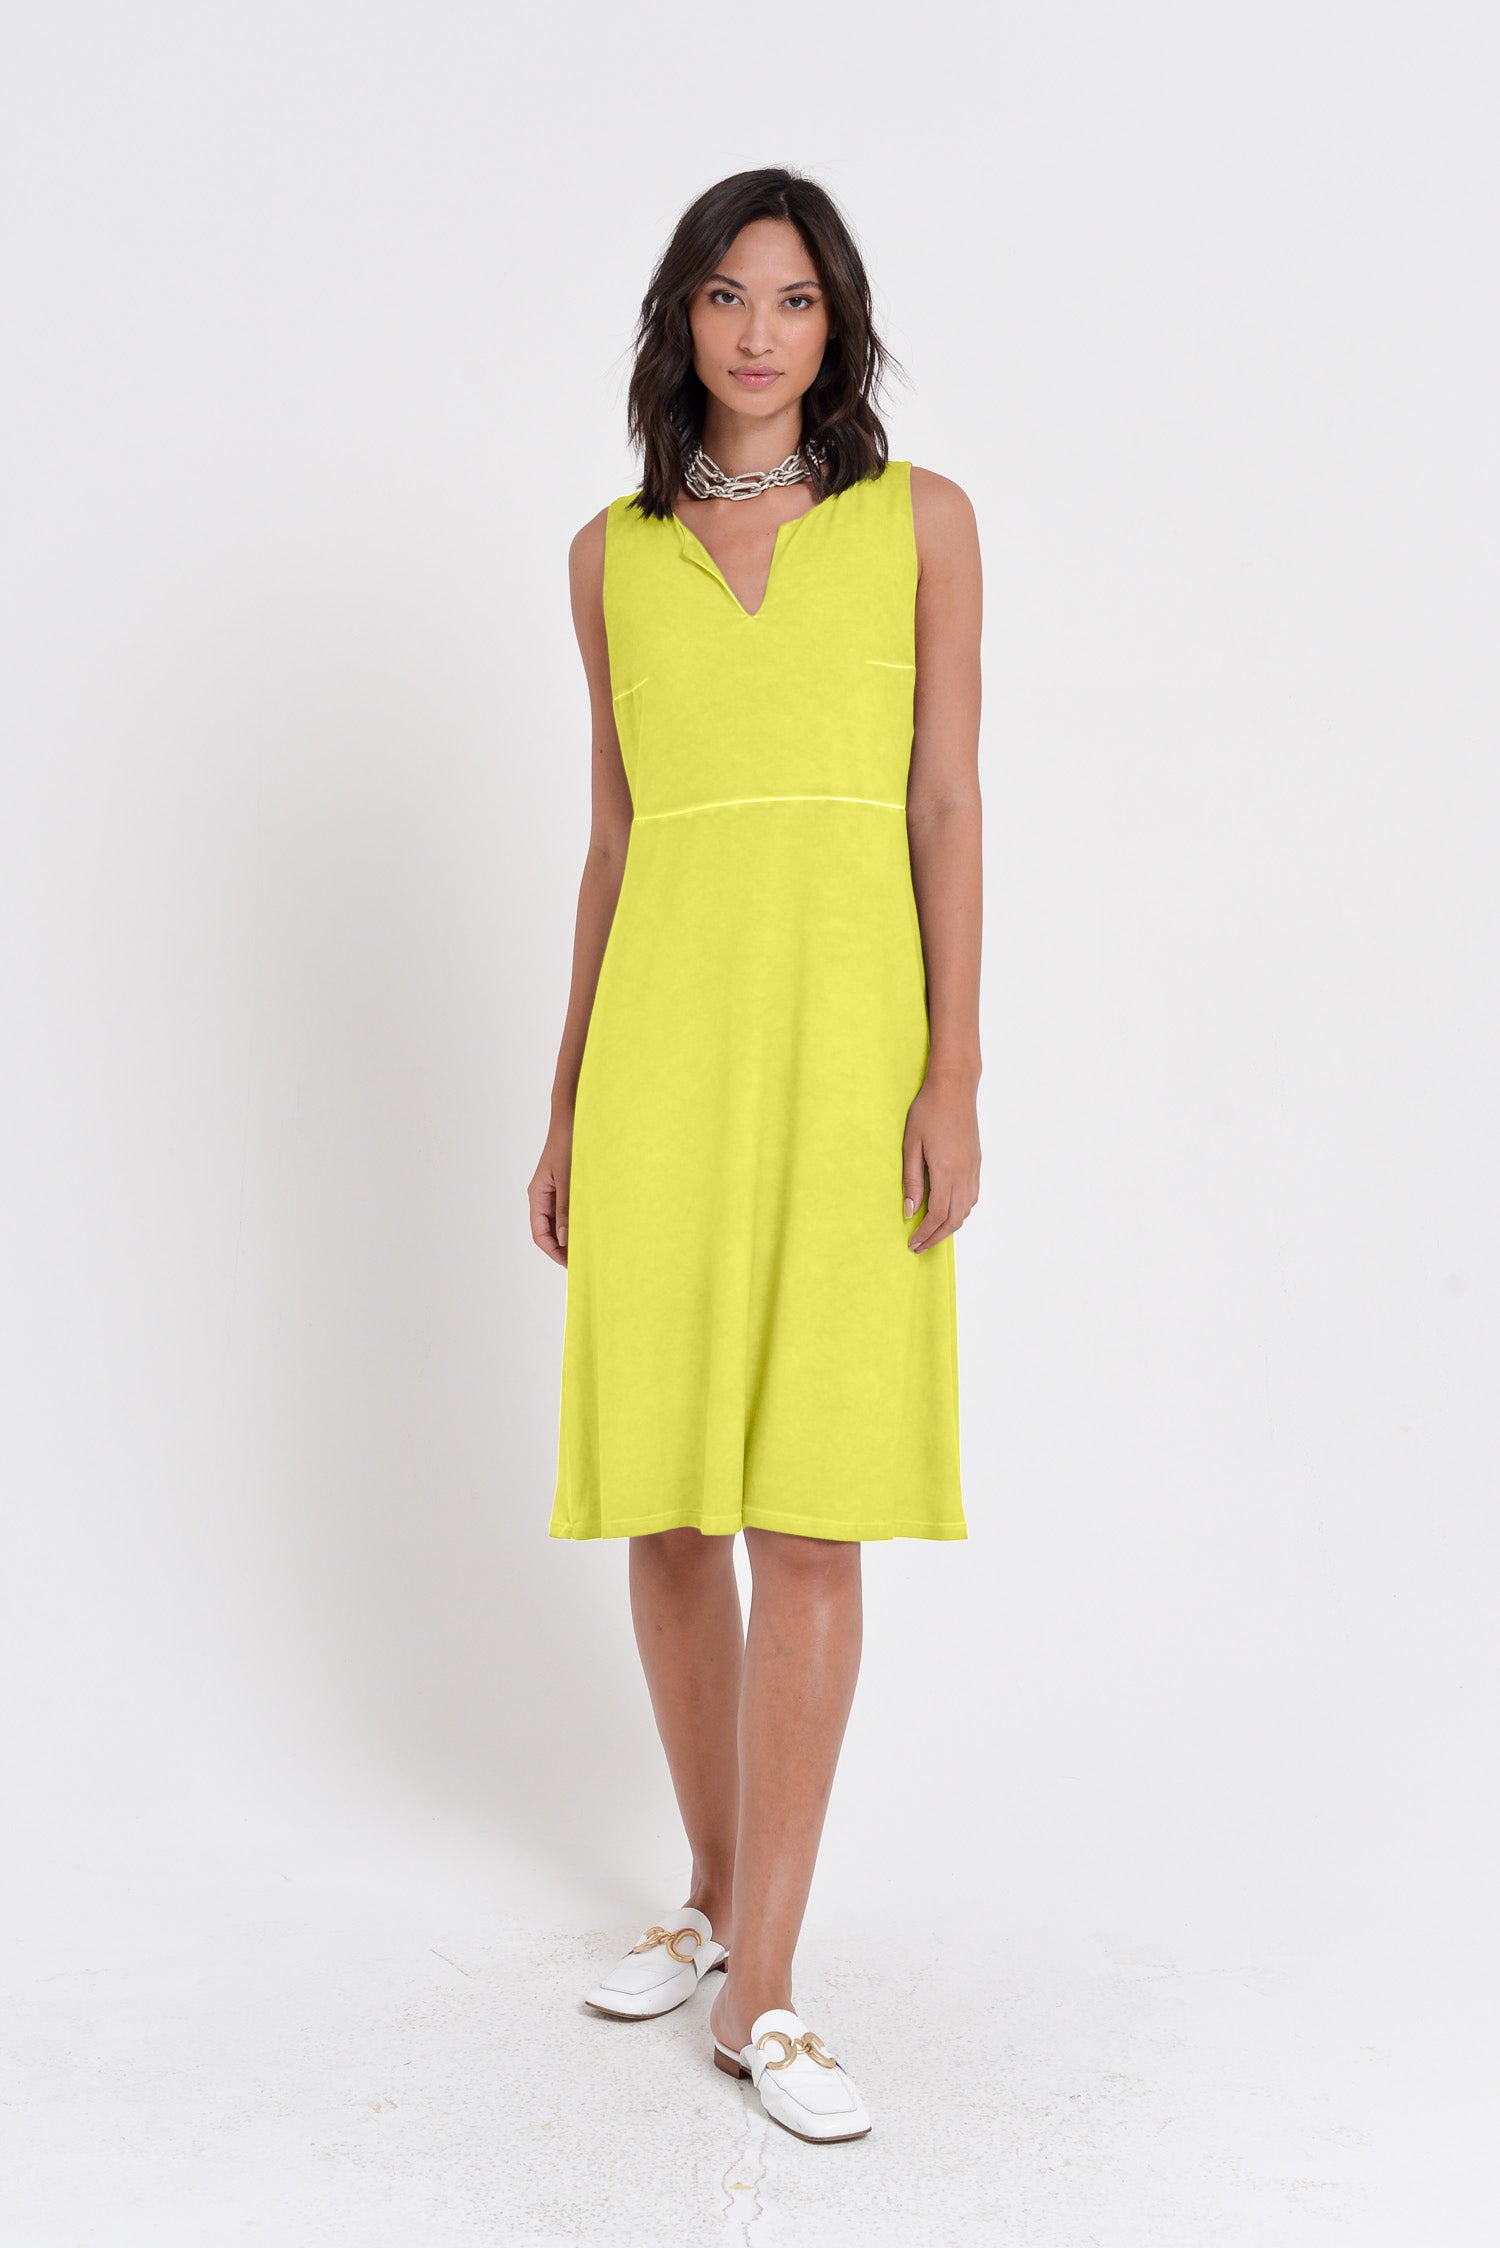 Lucy Dress - Women's Below The Knee Sleeveless Jersey Dress - Lime